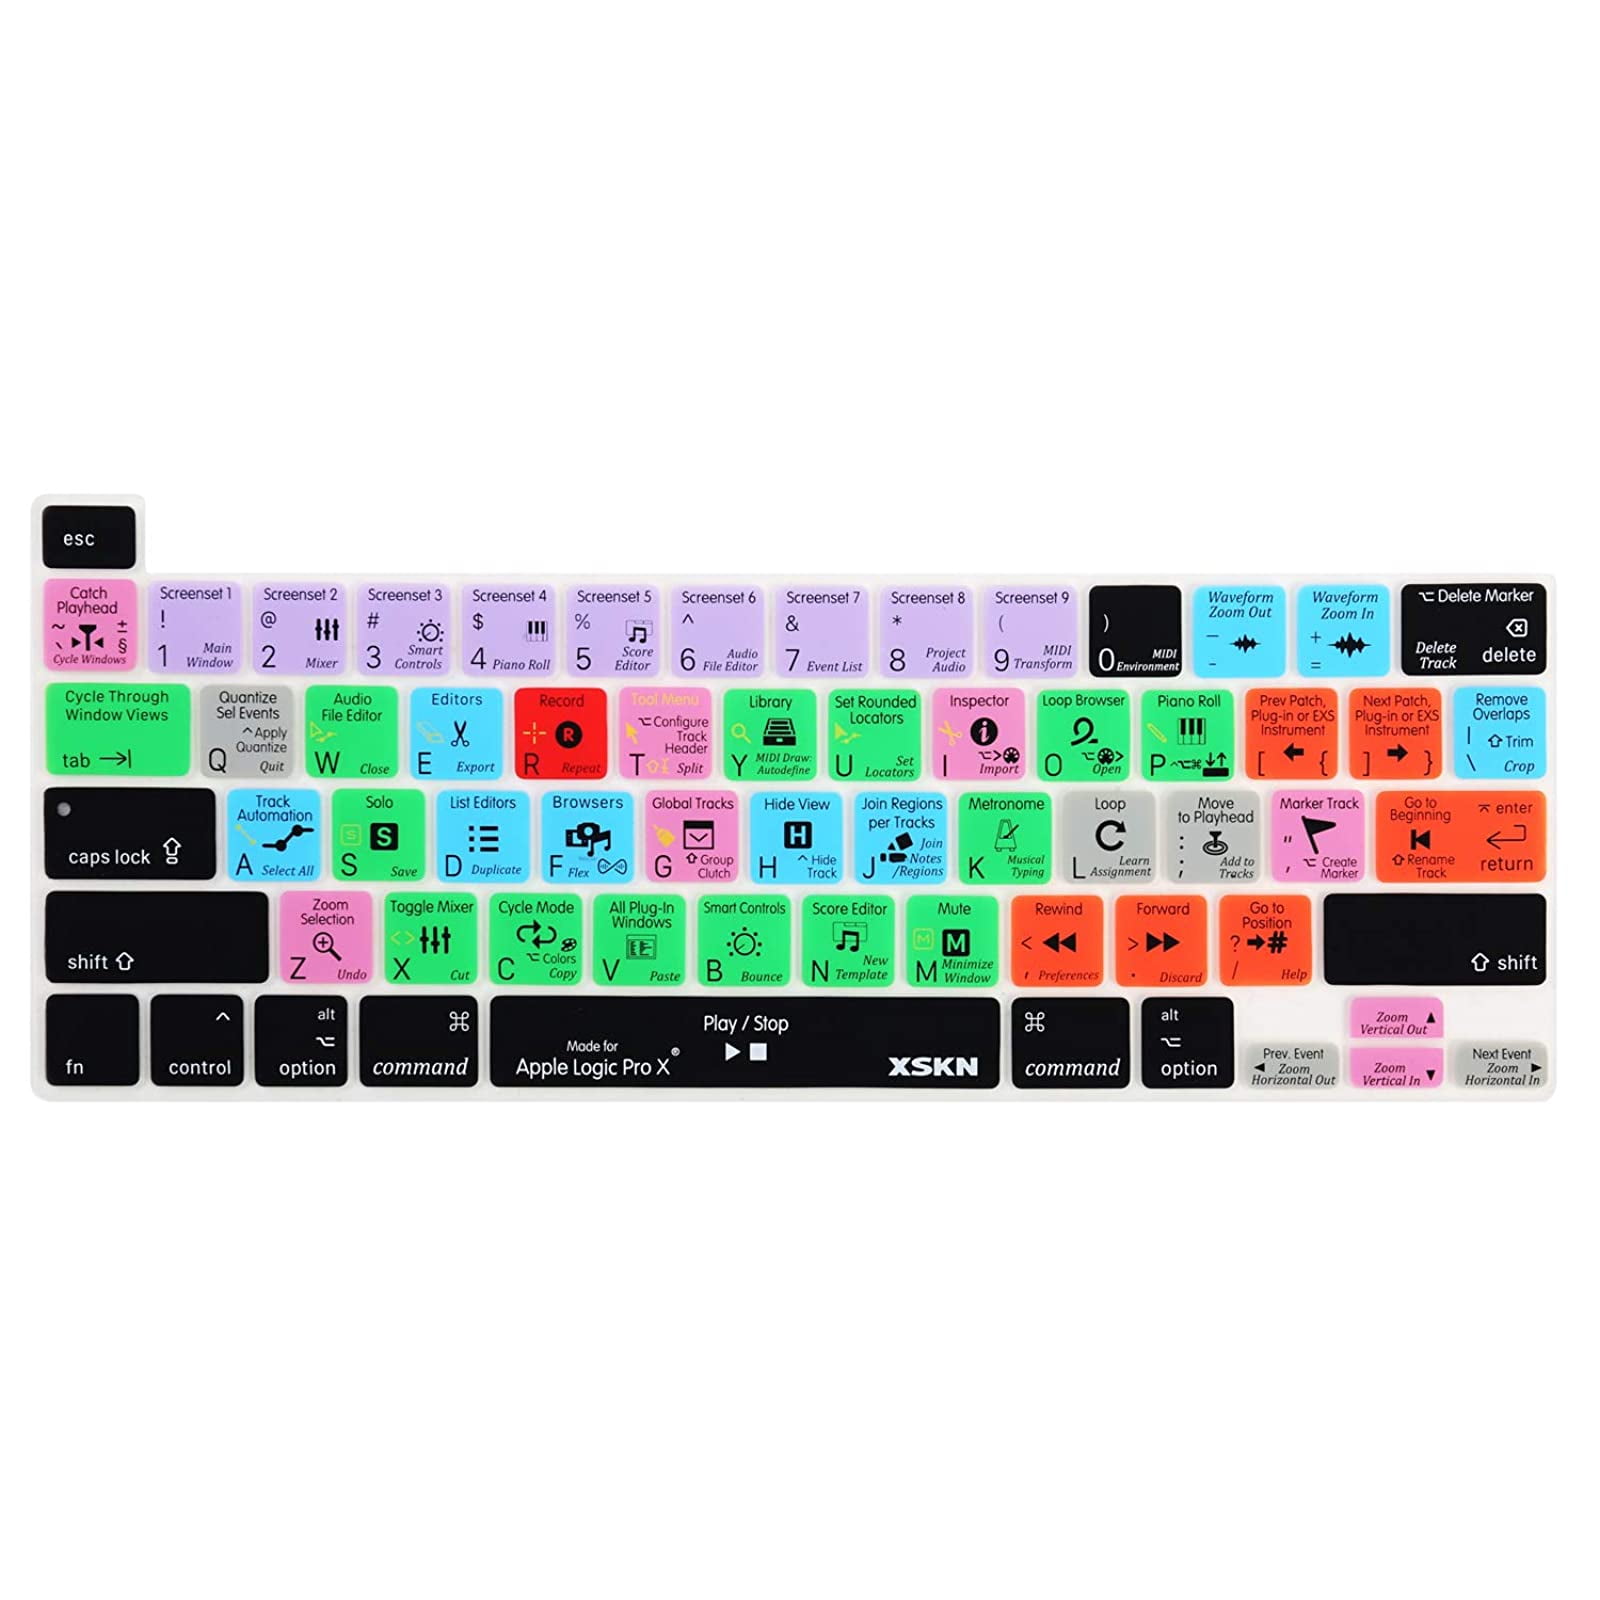 logic pro keyboard shortcuts